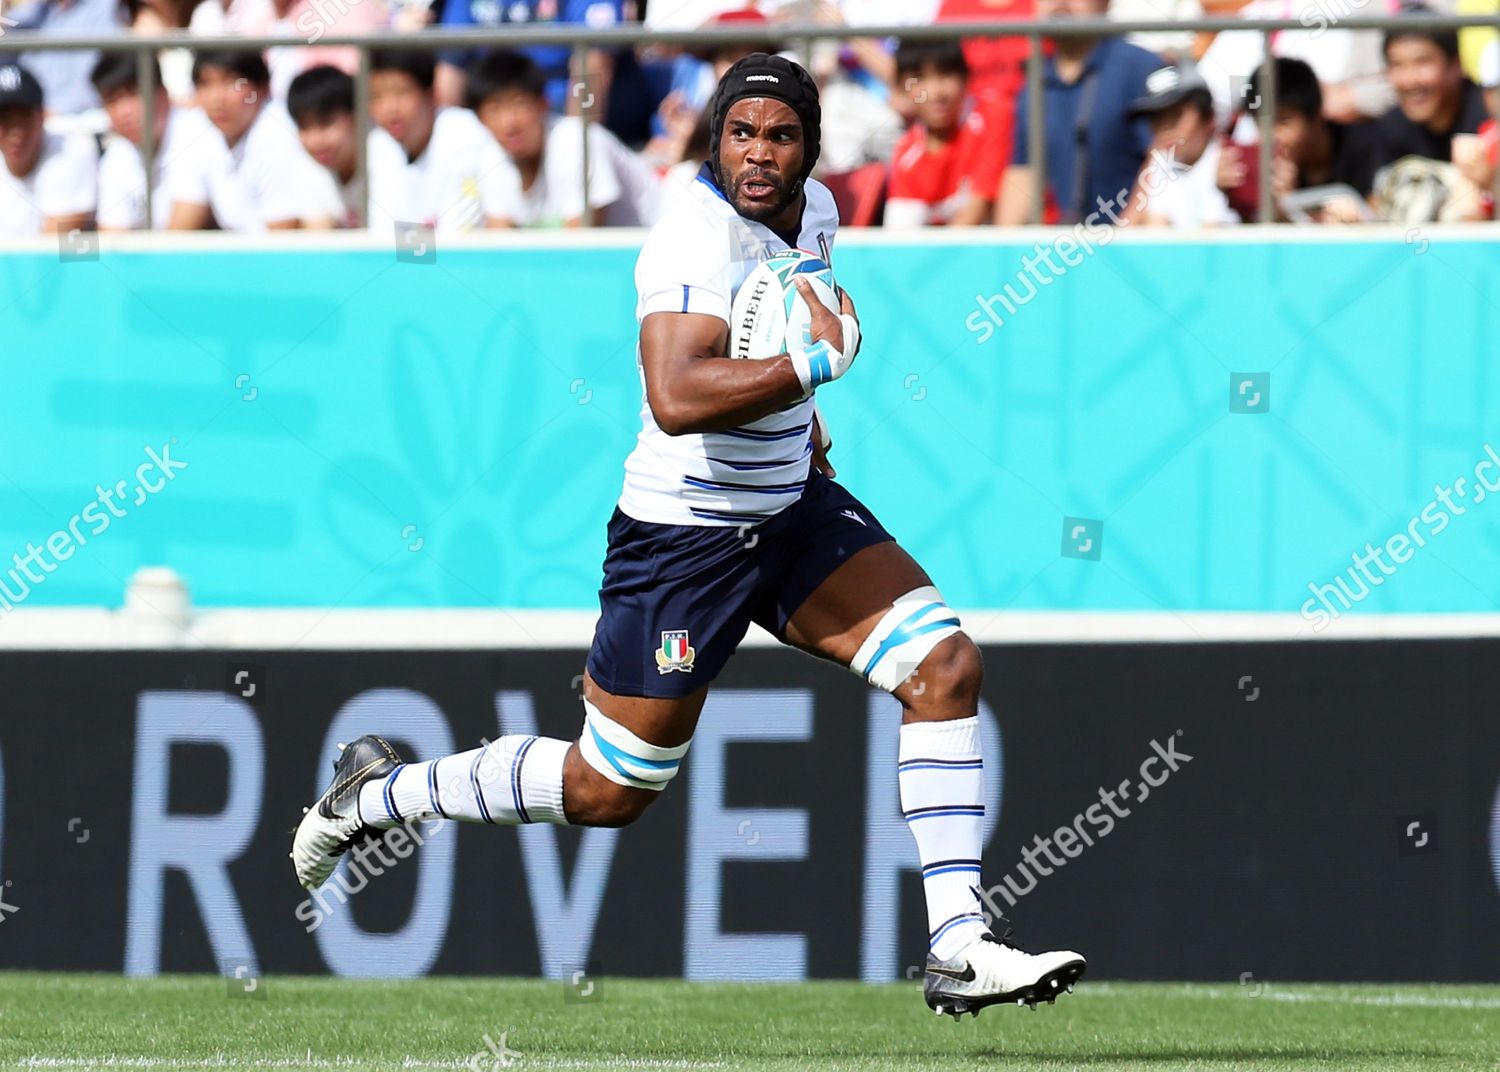 Rugby World Cup 2019, Kobe, Japan - 22 Sep 2019